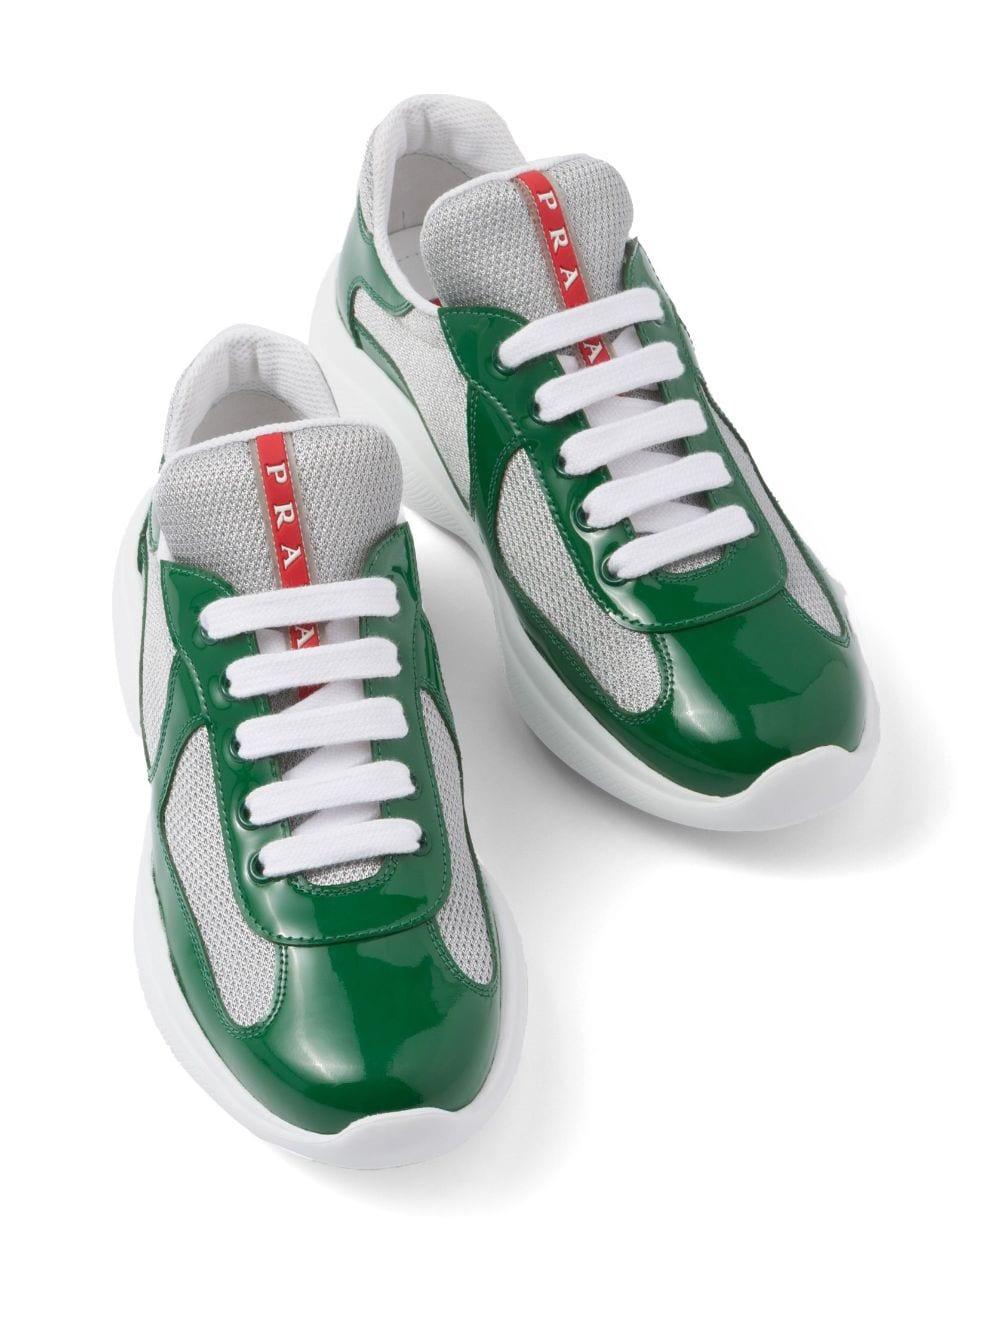 Prada America's Cup Low-top Sneakers in Green | Lyst